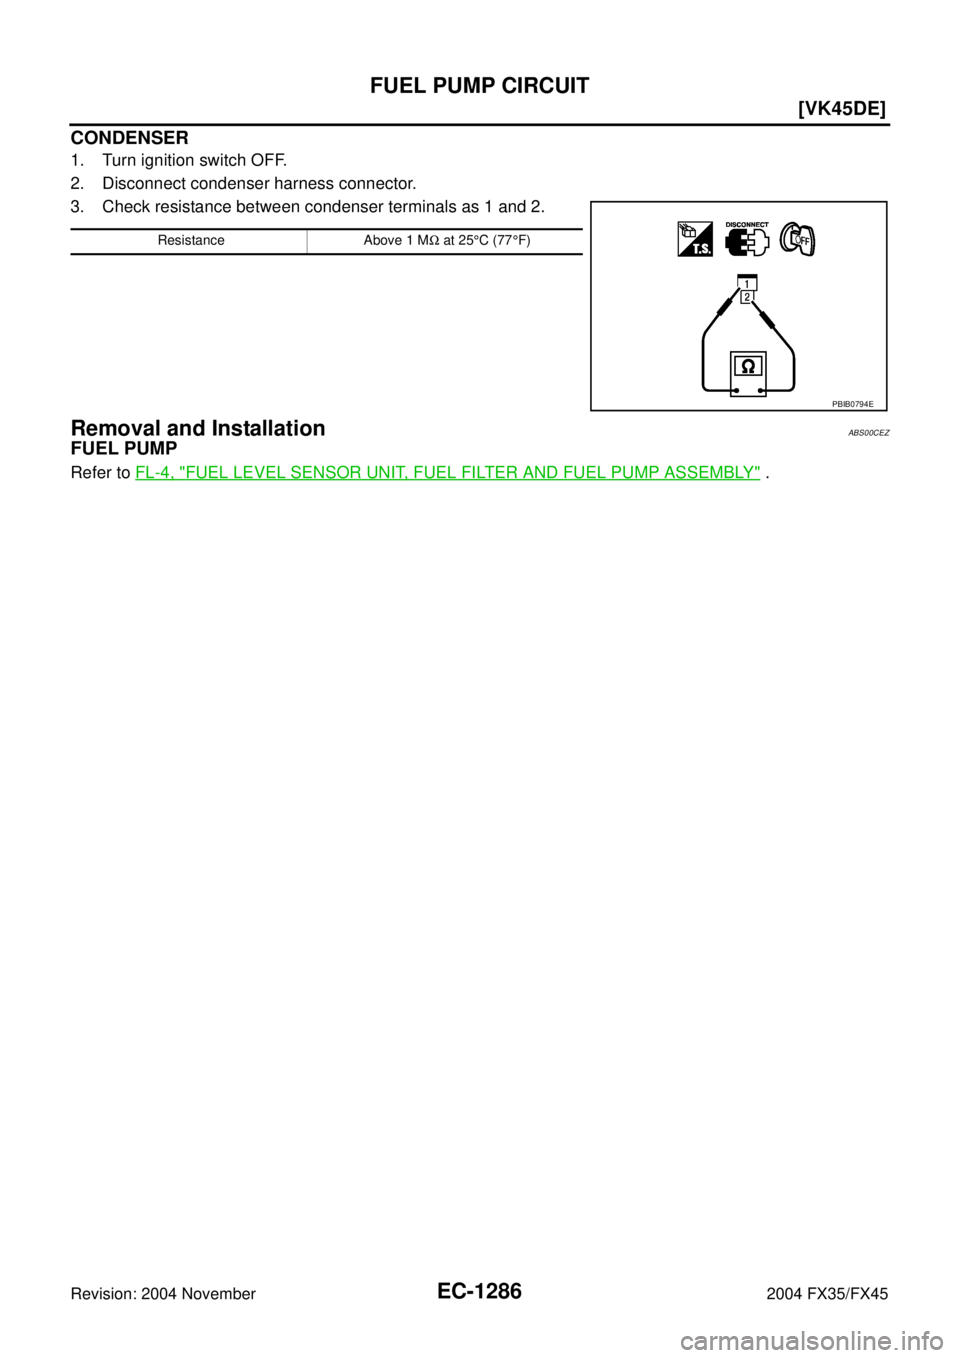 INFINITI FX35 2004  Service Manual EC-1286
[VK45DE]
FUEL PUMP CIRCUIT
Revision: 2004 November 2004 FX35/FX45
CONDENSER
1. Turn ignition switch OFF.
2. Disconnect condenser harness connector.
3. Check resistance between condenser termin